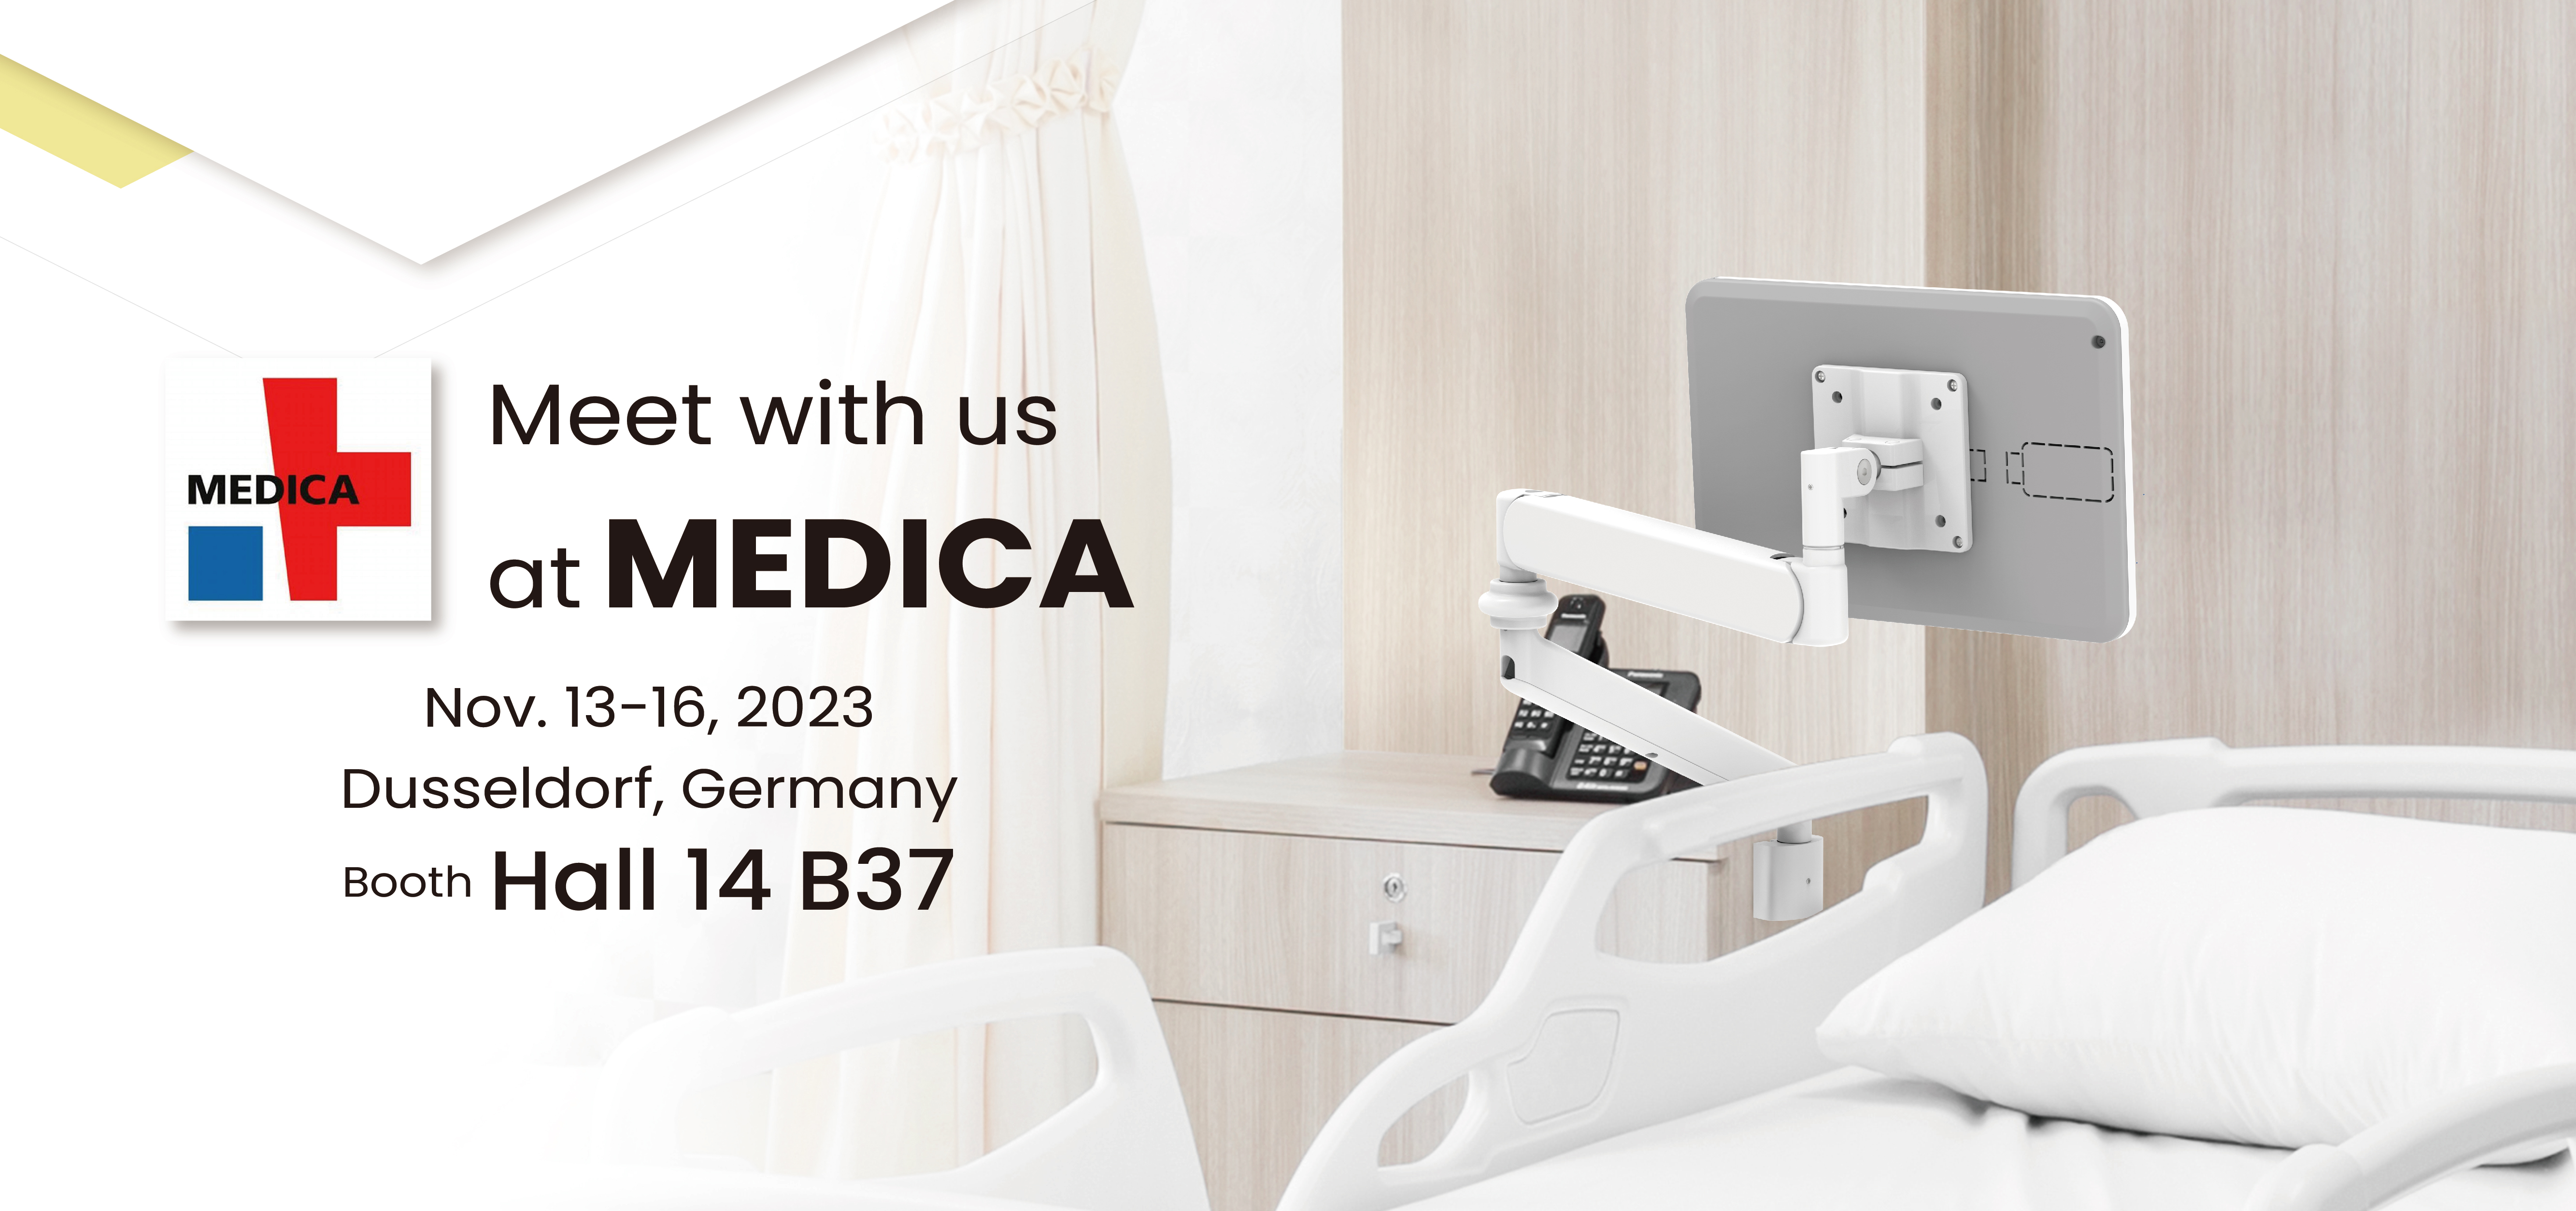 INVITATION 2023 Medica / Dusseldorf, Germany, Nov. 13 - 16, 2023